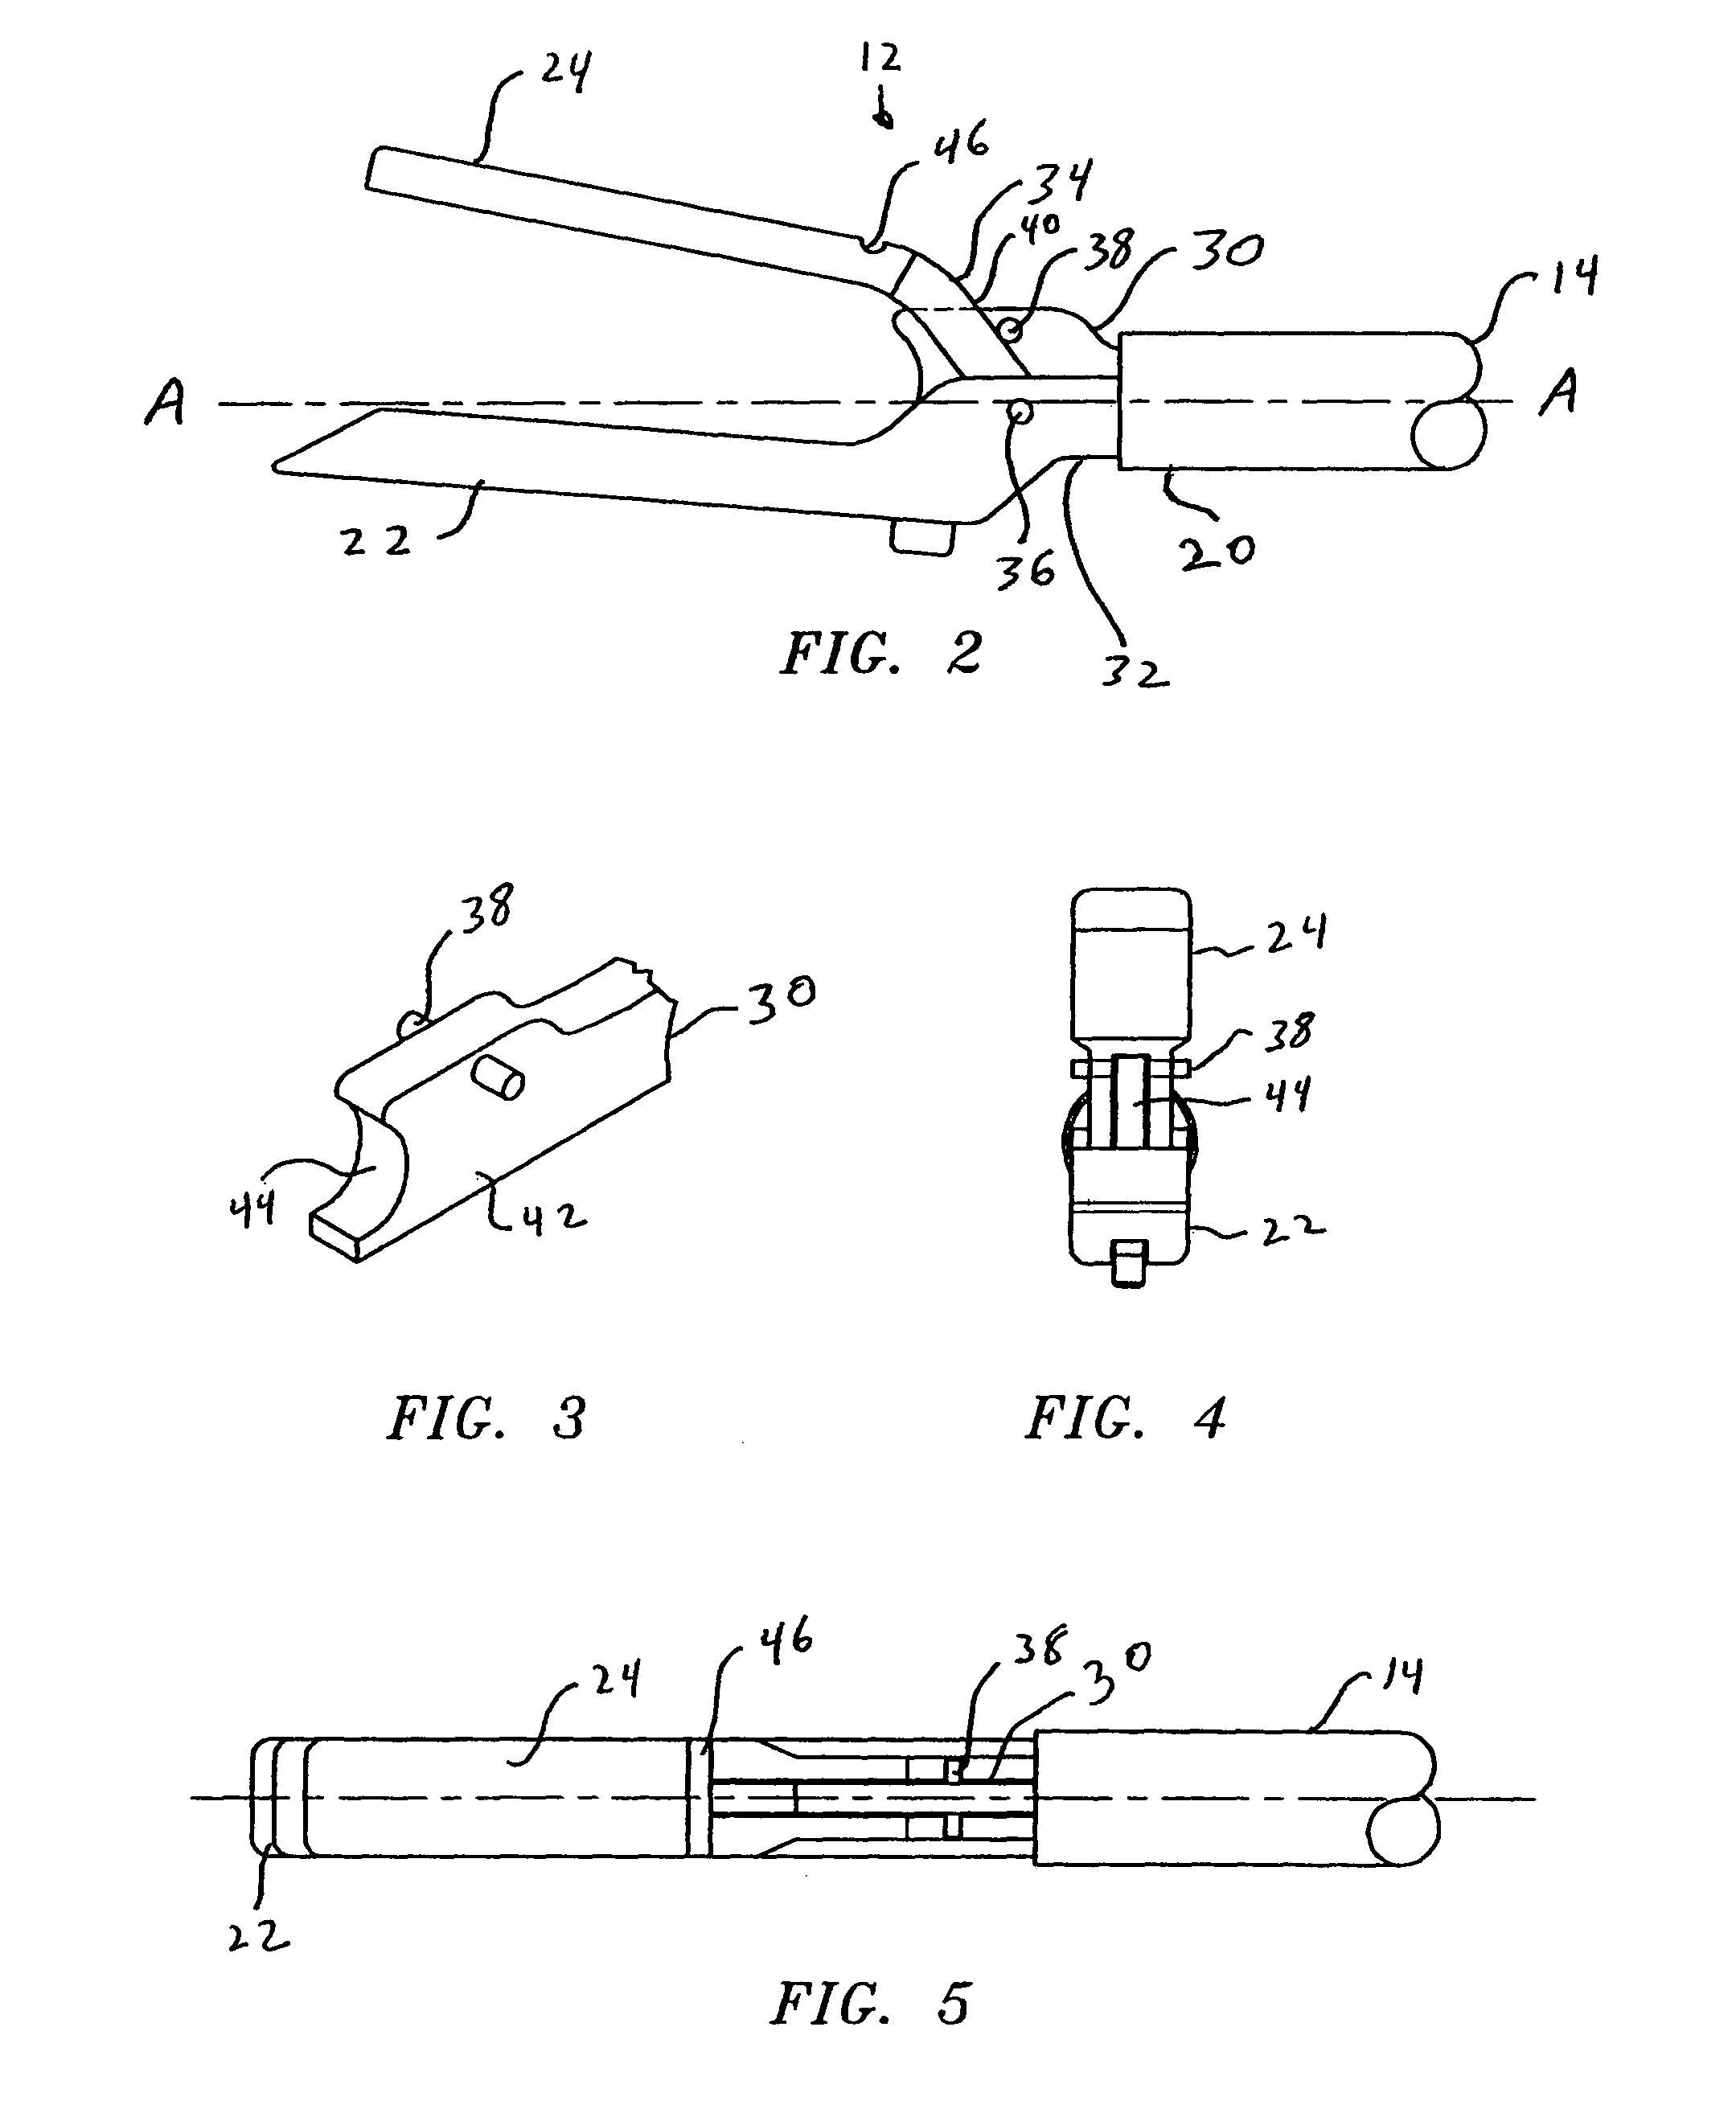 Anvil position detector for a surgical stapler